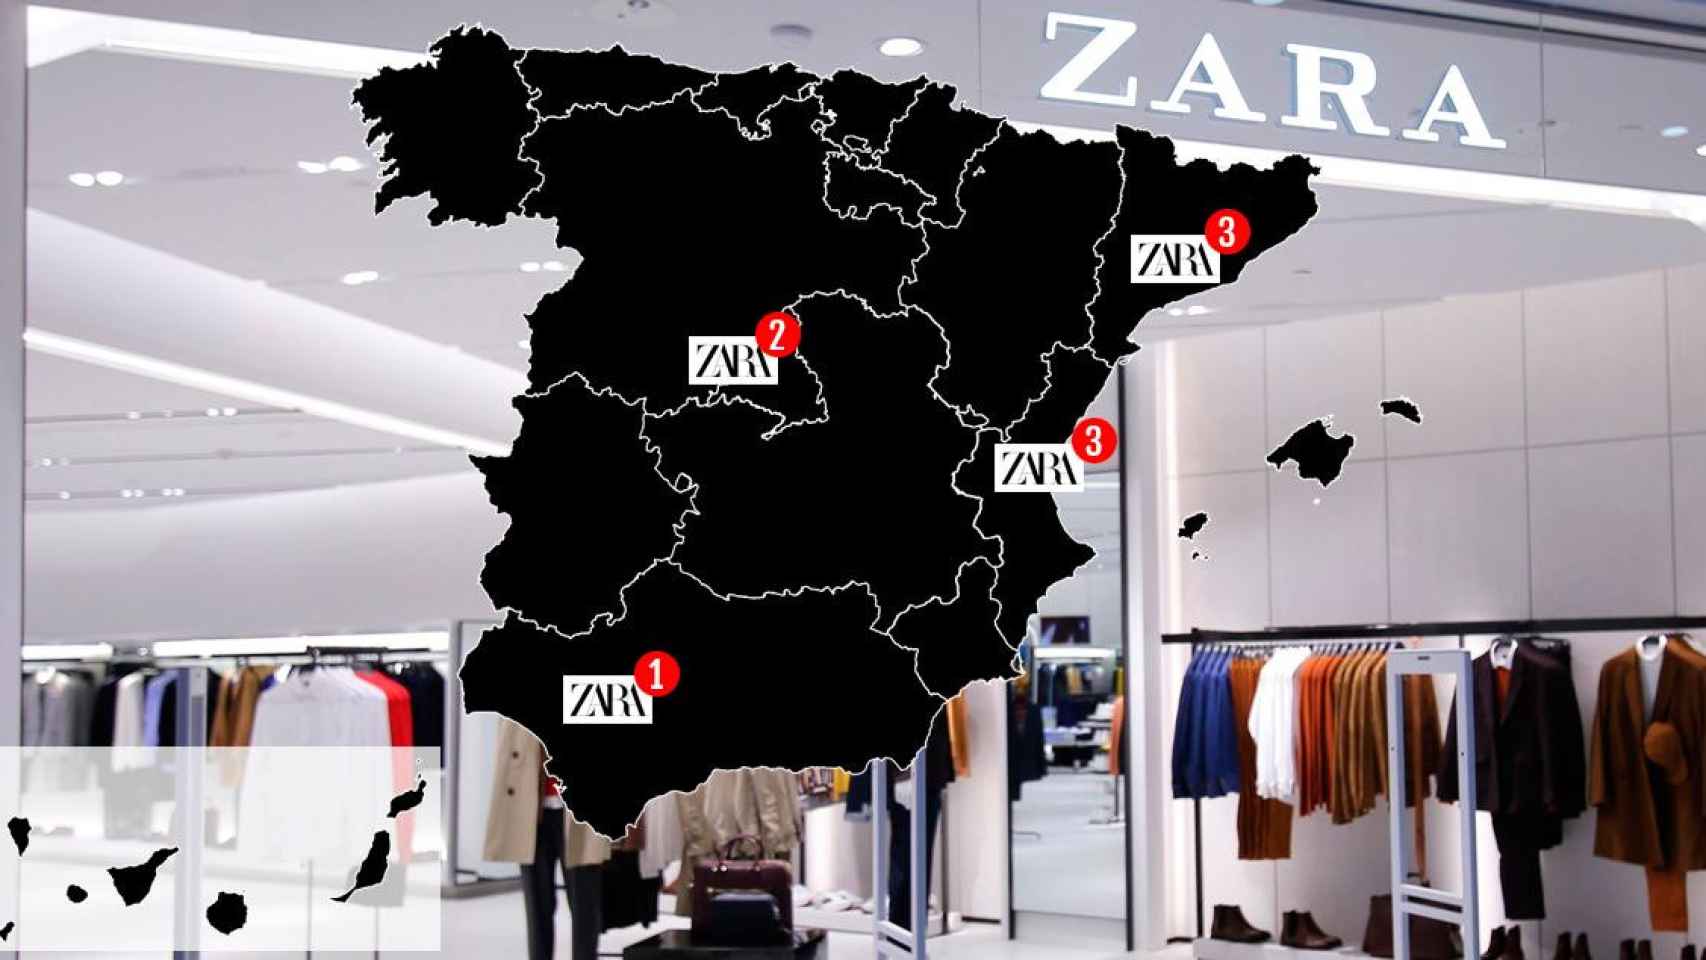 Tiendas de Zara abiertas en fase de desescalada en España / CG